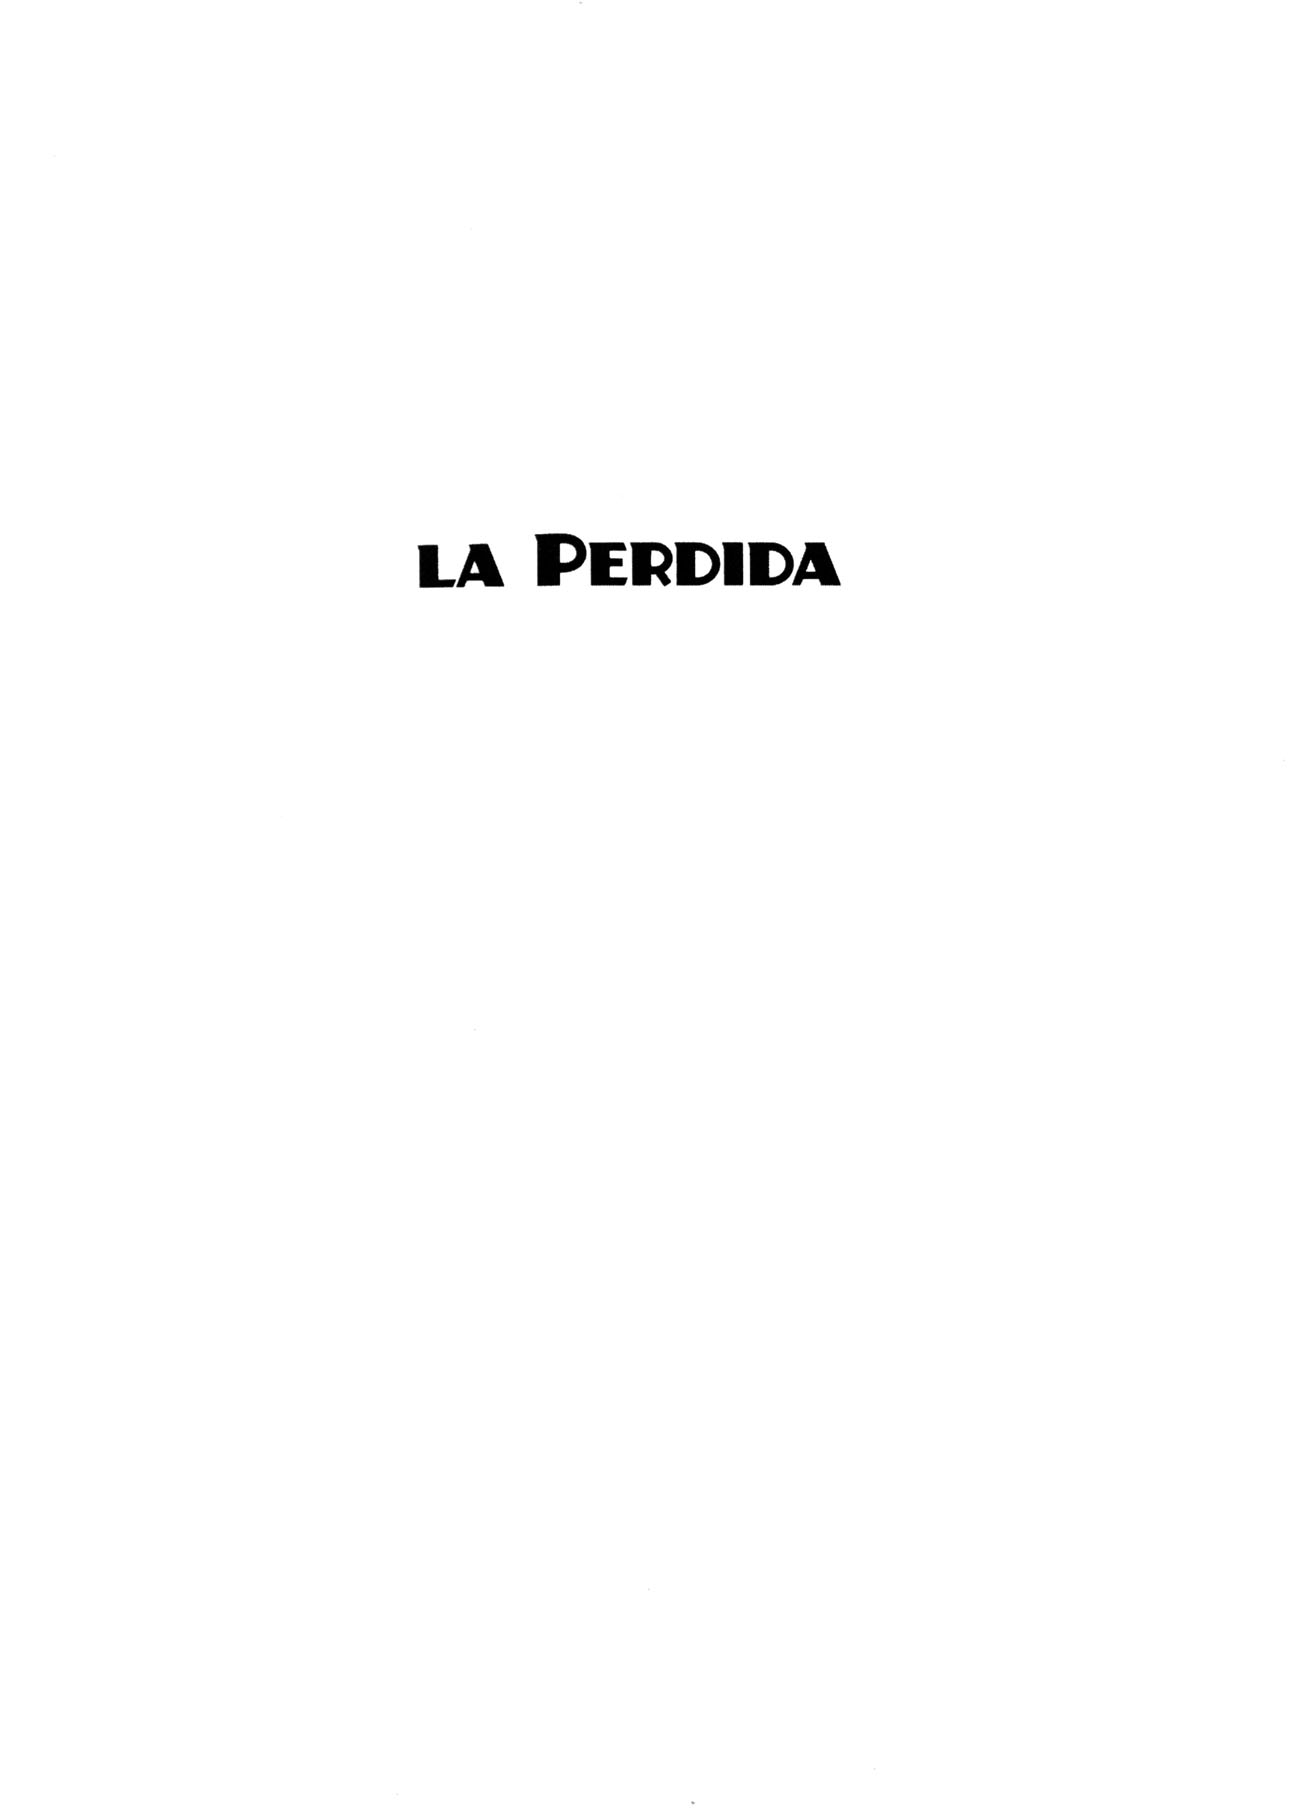 Read online La Perdida comic -  Issue # TPB - 4